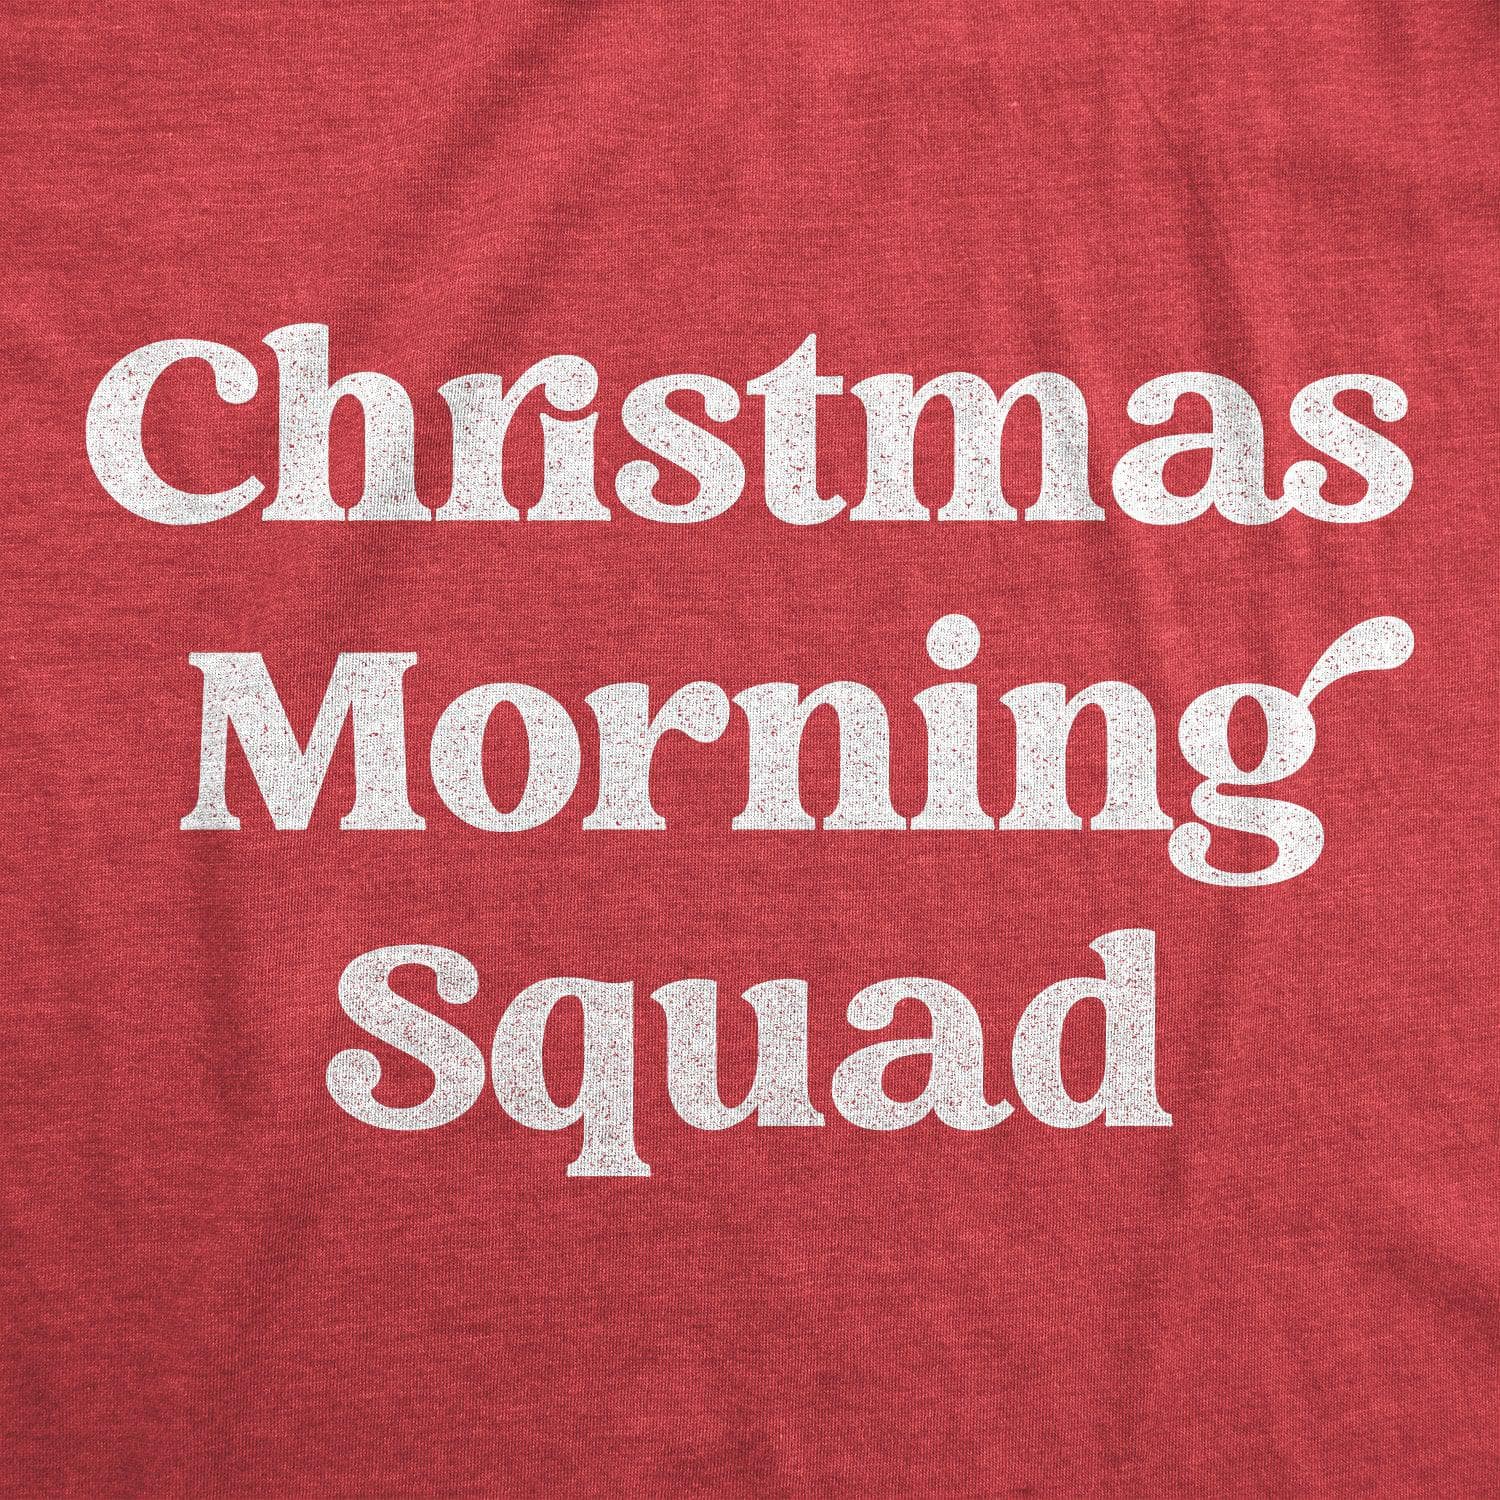 Christmas Morning Squad Toddler Tshirt  -  Crazy Dog T-Shirts